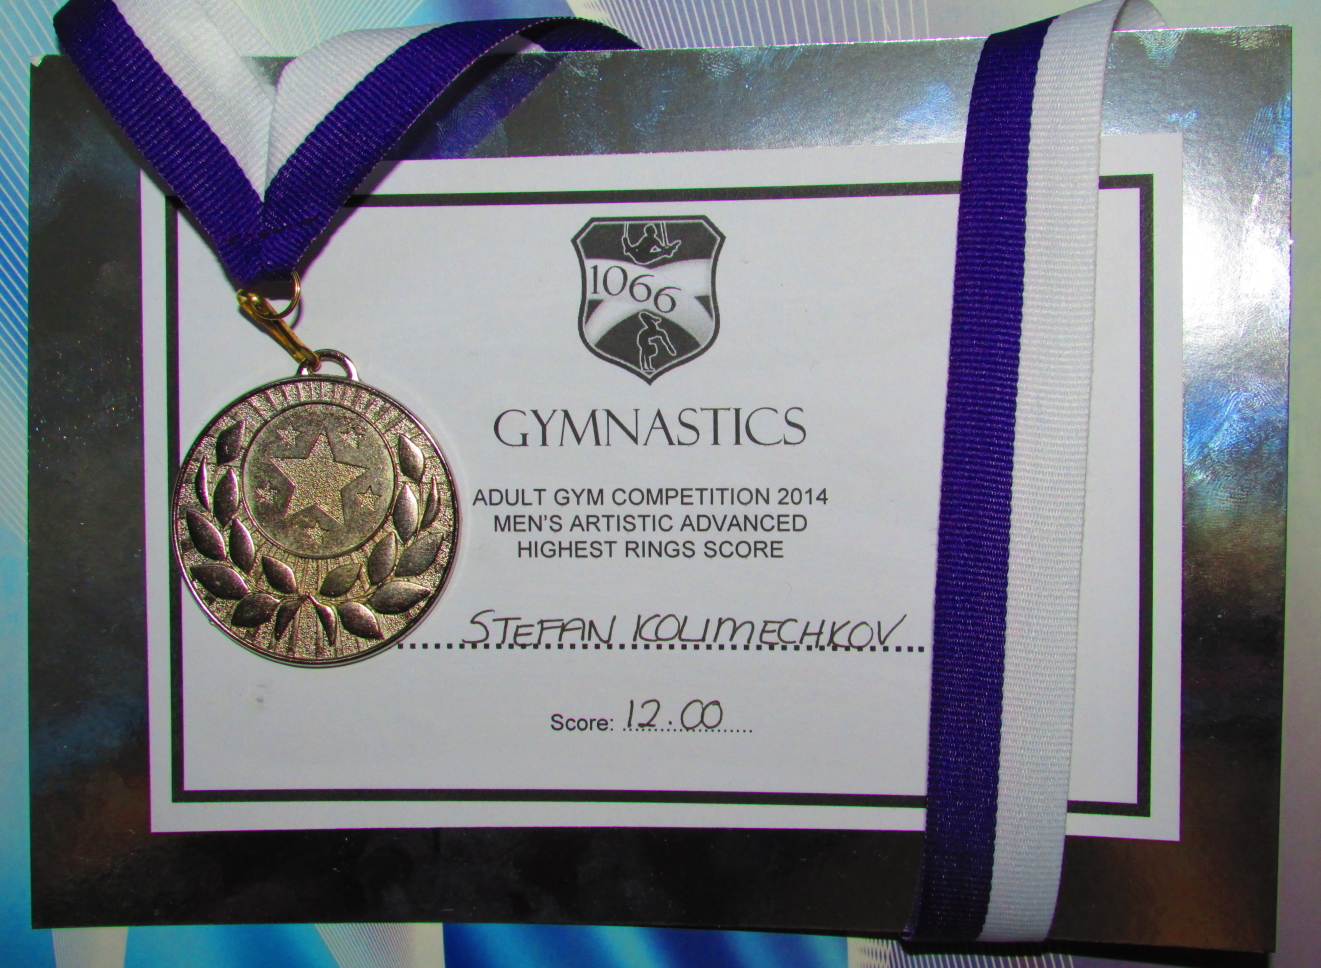 Awards by 1066 Gymnastics Academy - Stefan Kolimechkov